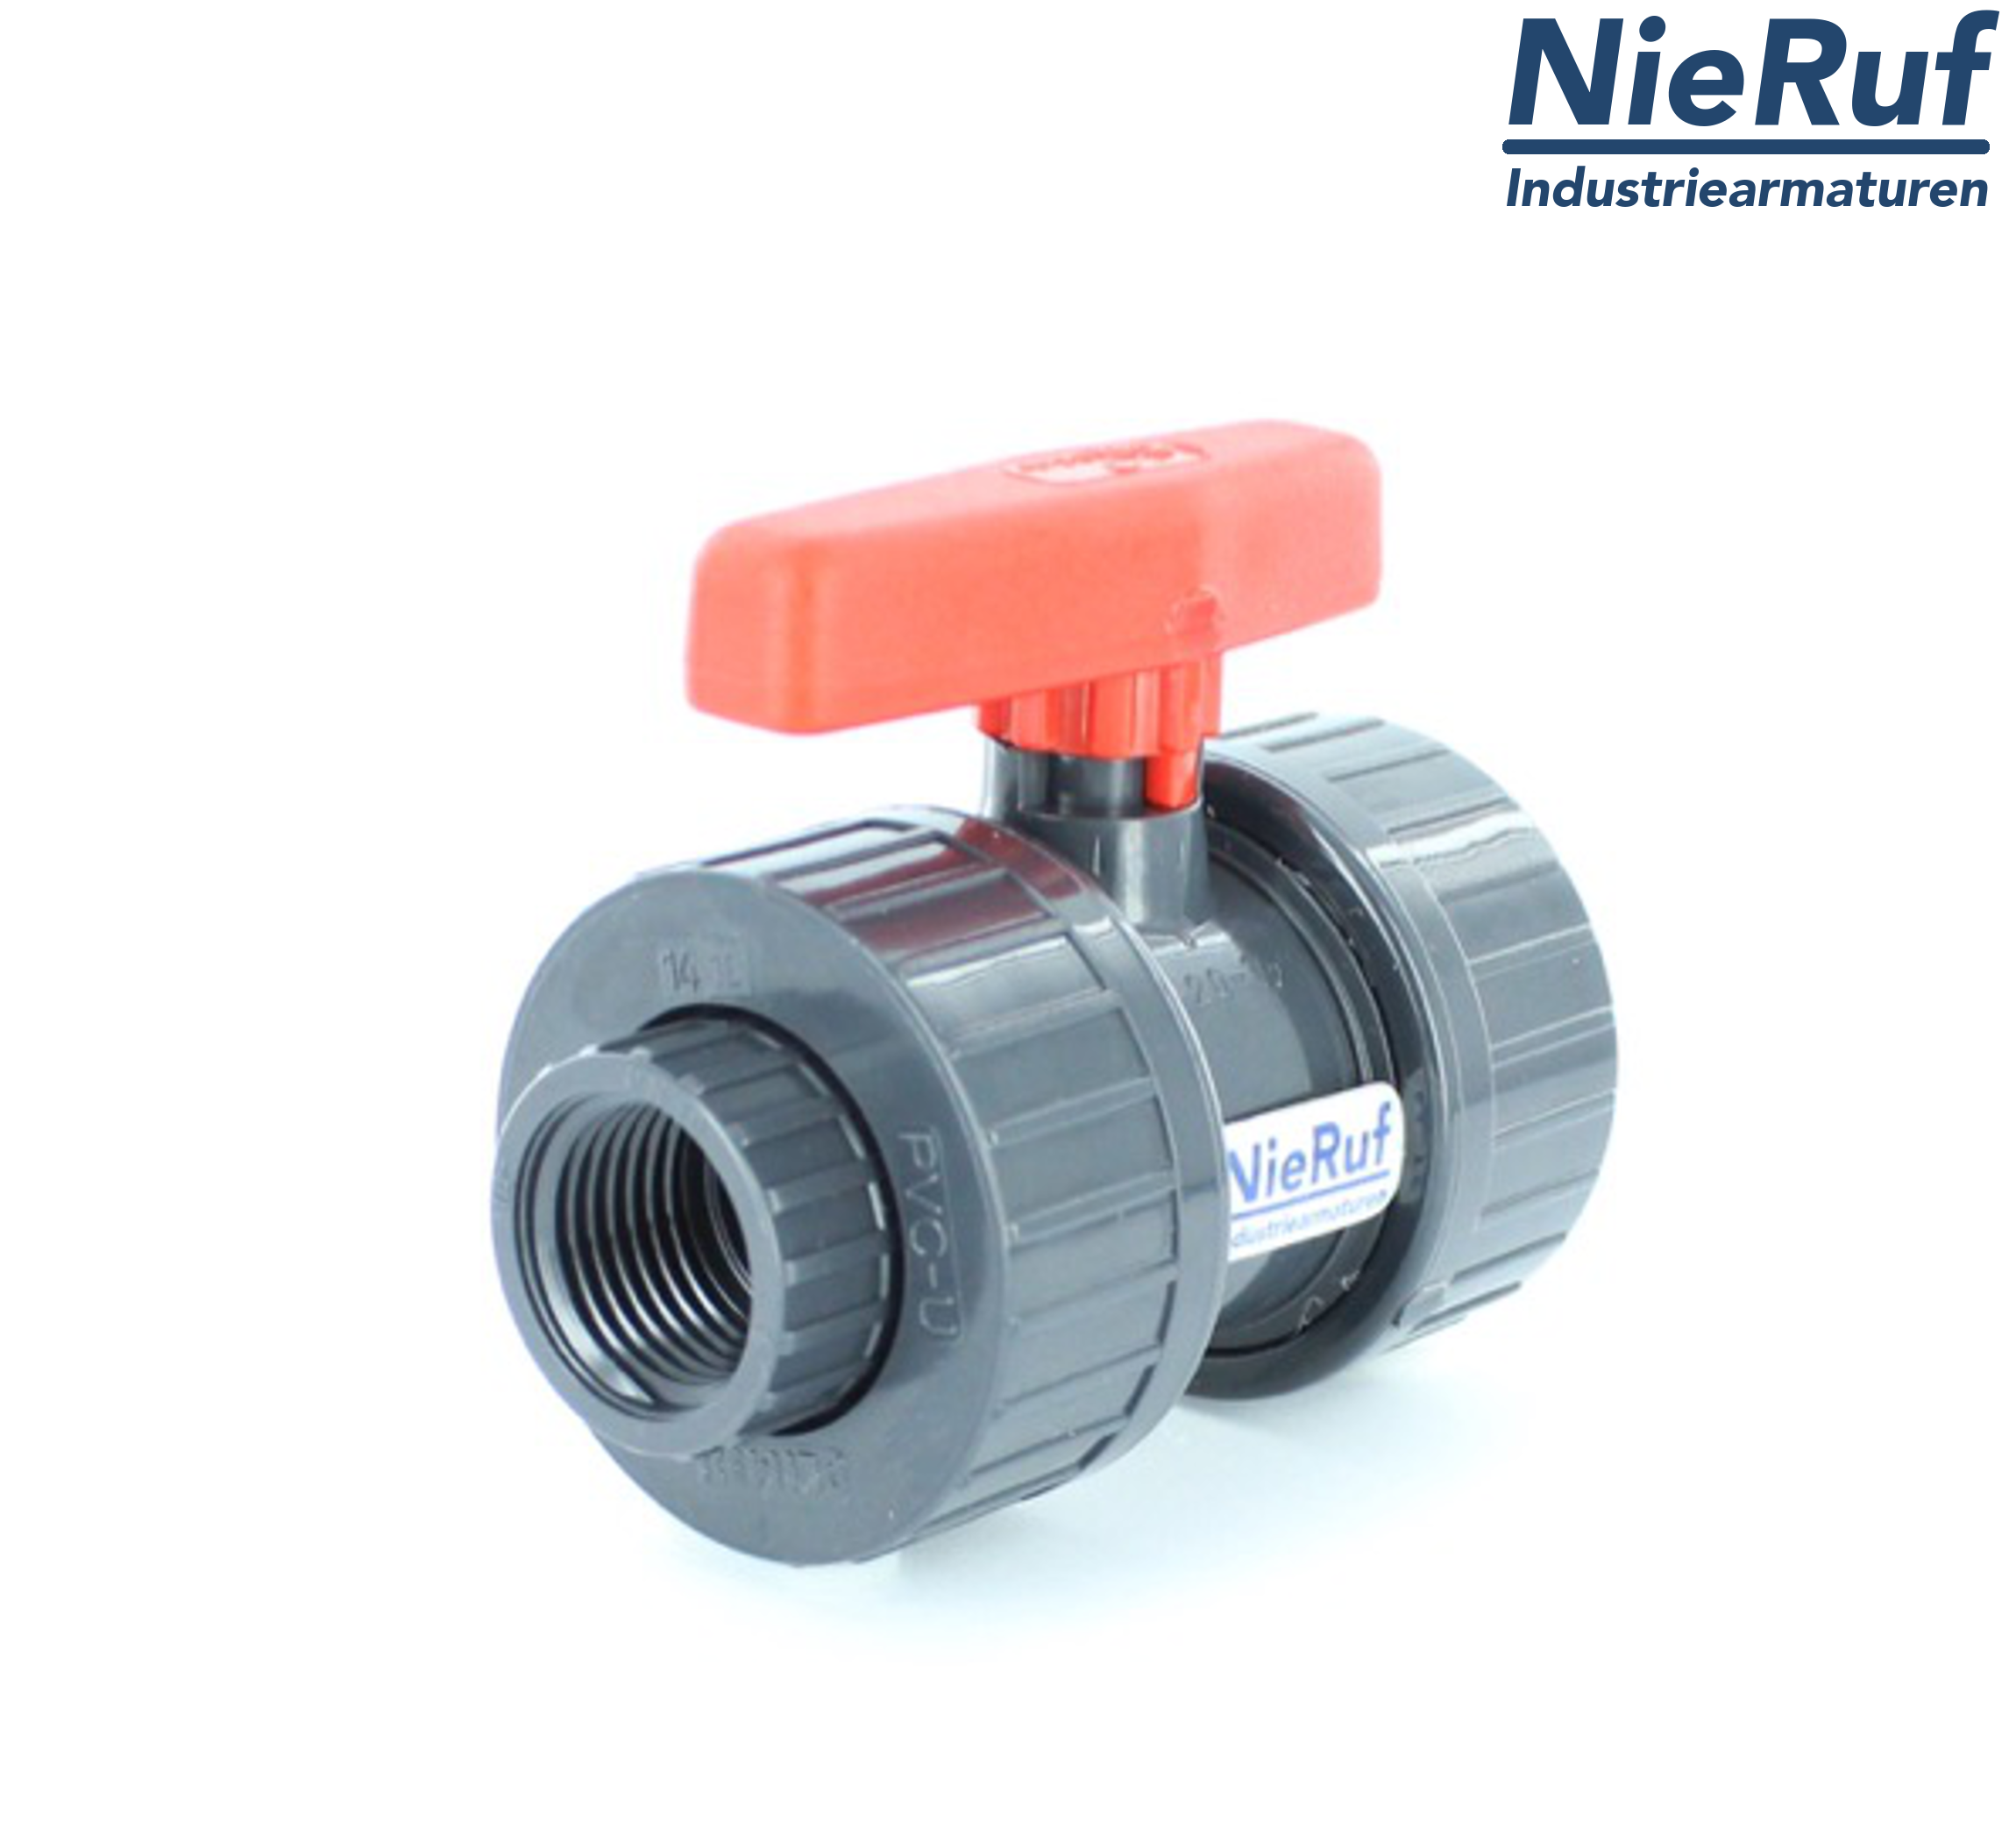 PVC-ball valve DN20 - 3/4" inch KK02 Hytrel/EPDM